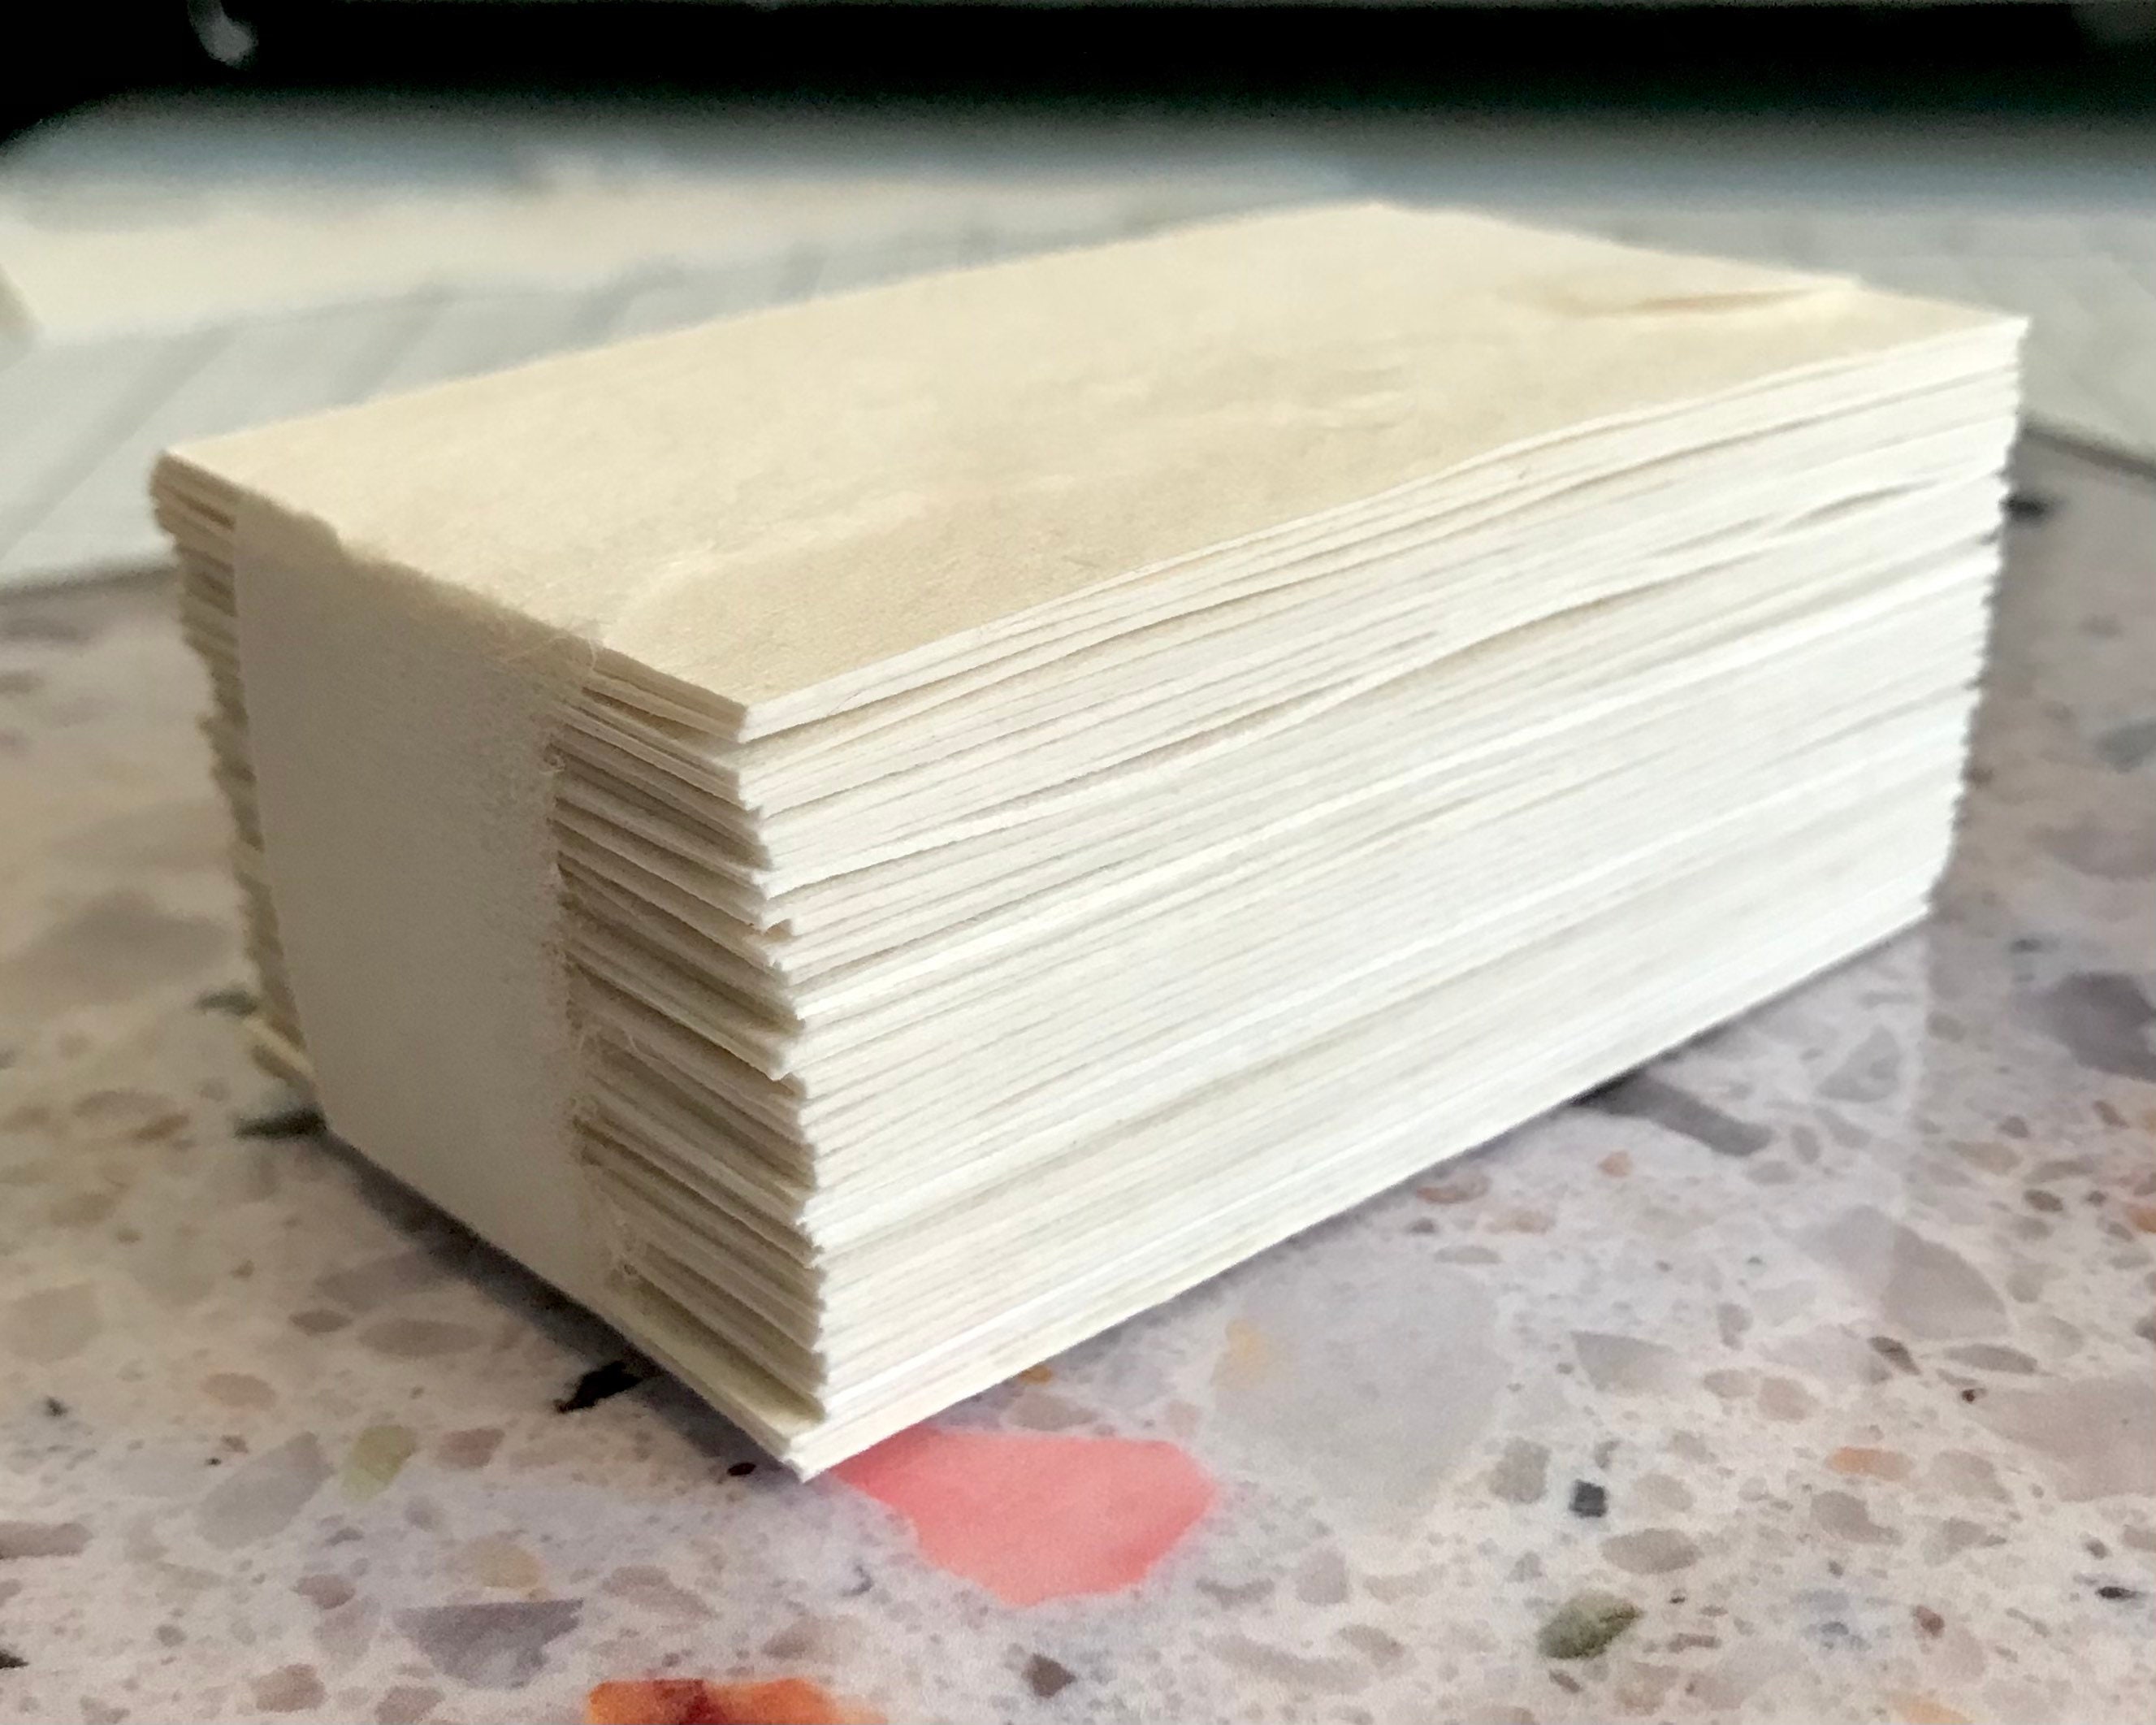 Business Card Size Bulk Pack of 50 Cut Edge Handmade Paper, Cotton